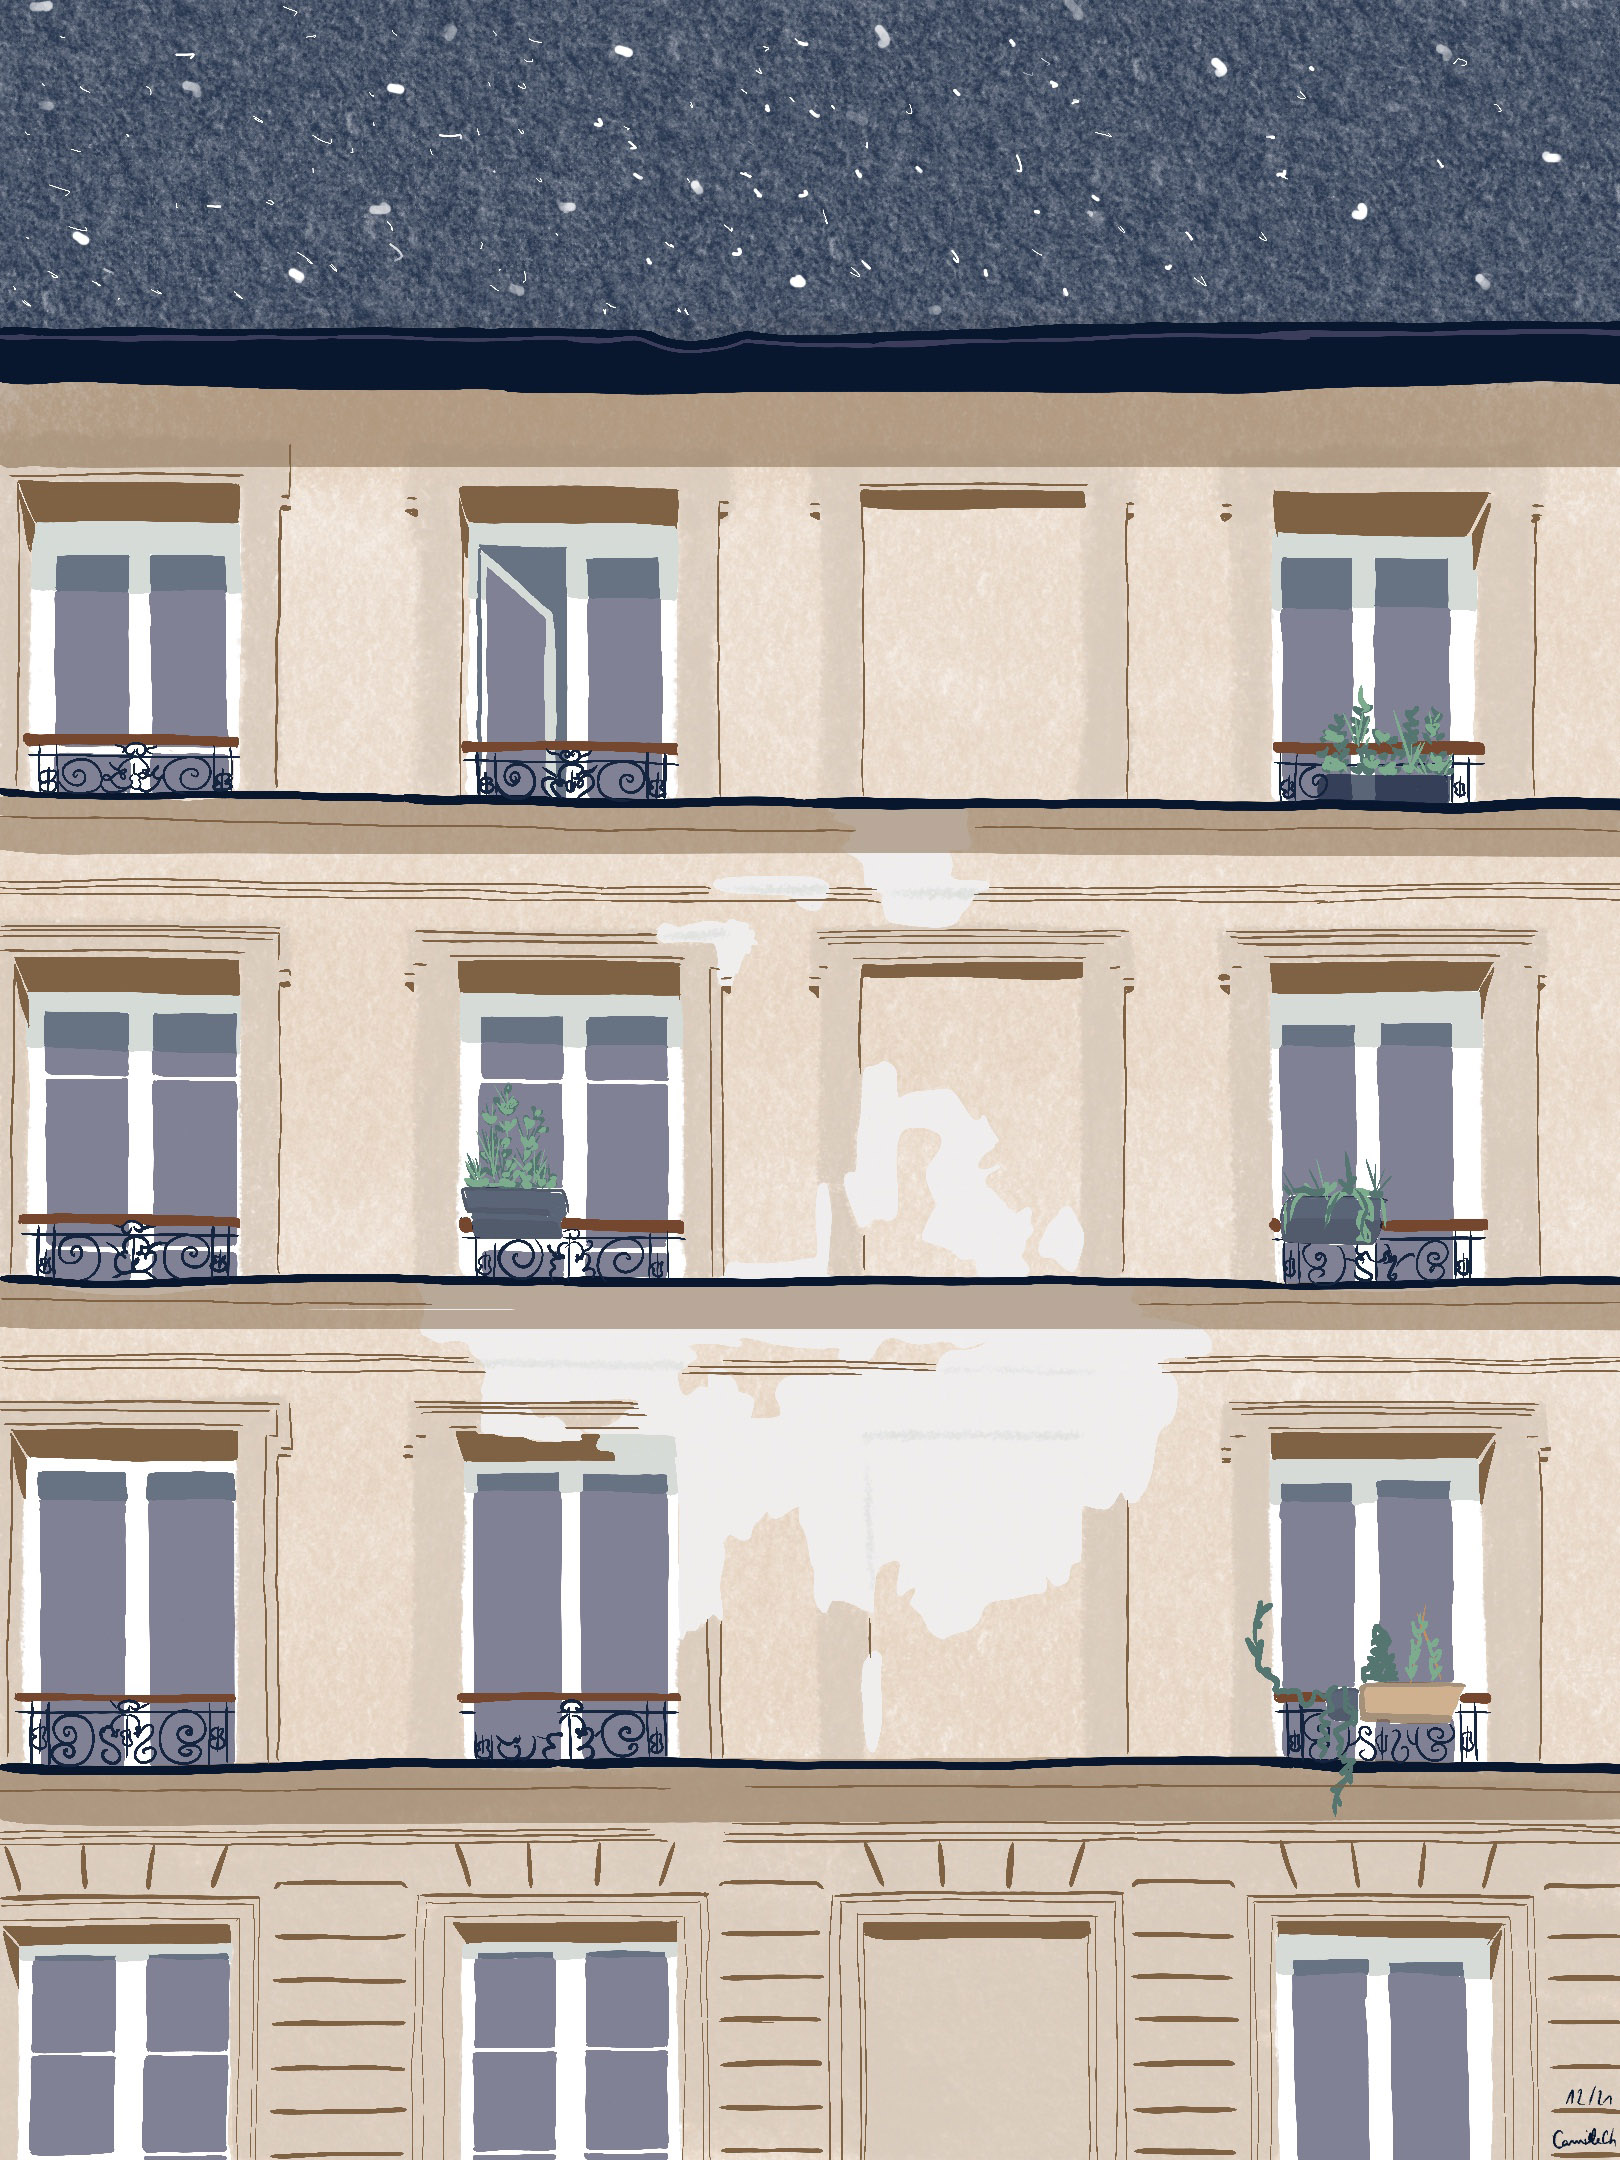 Façade parisienne ; illustration